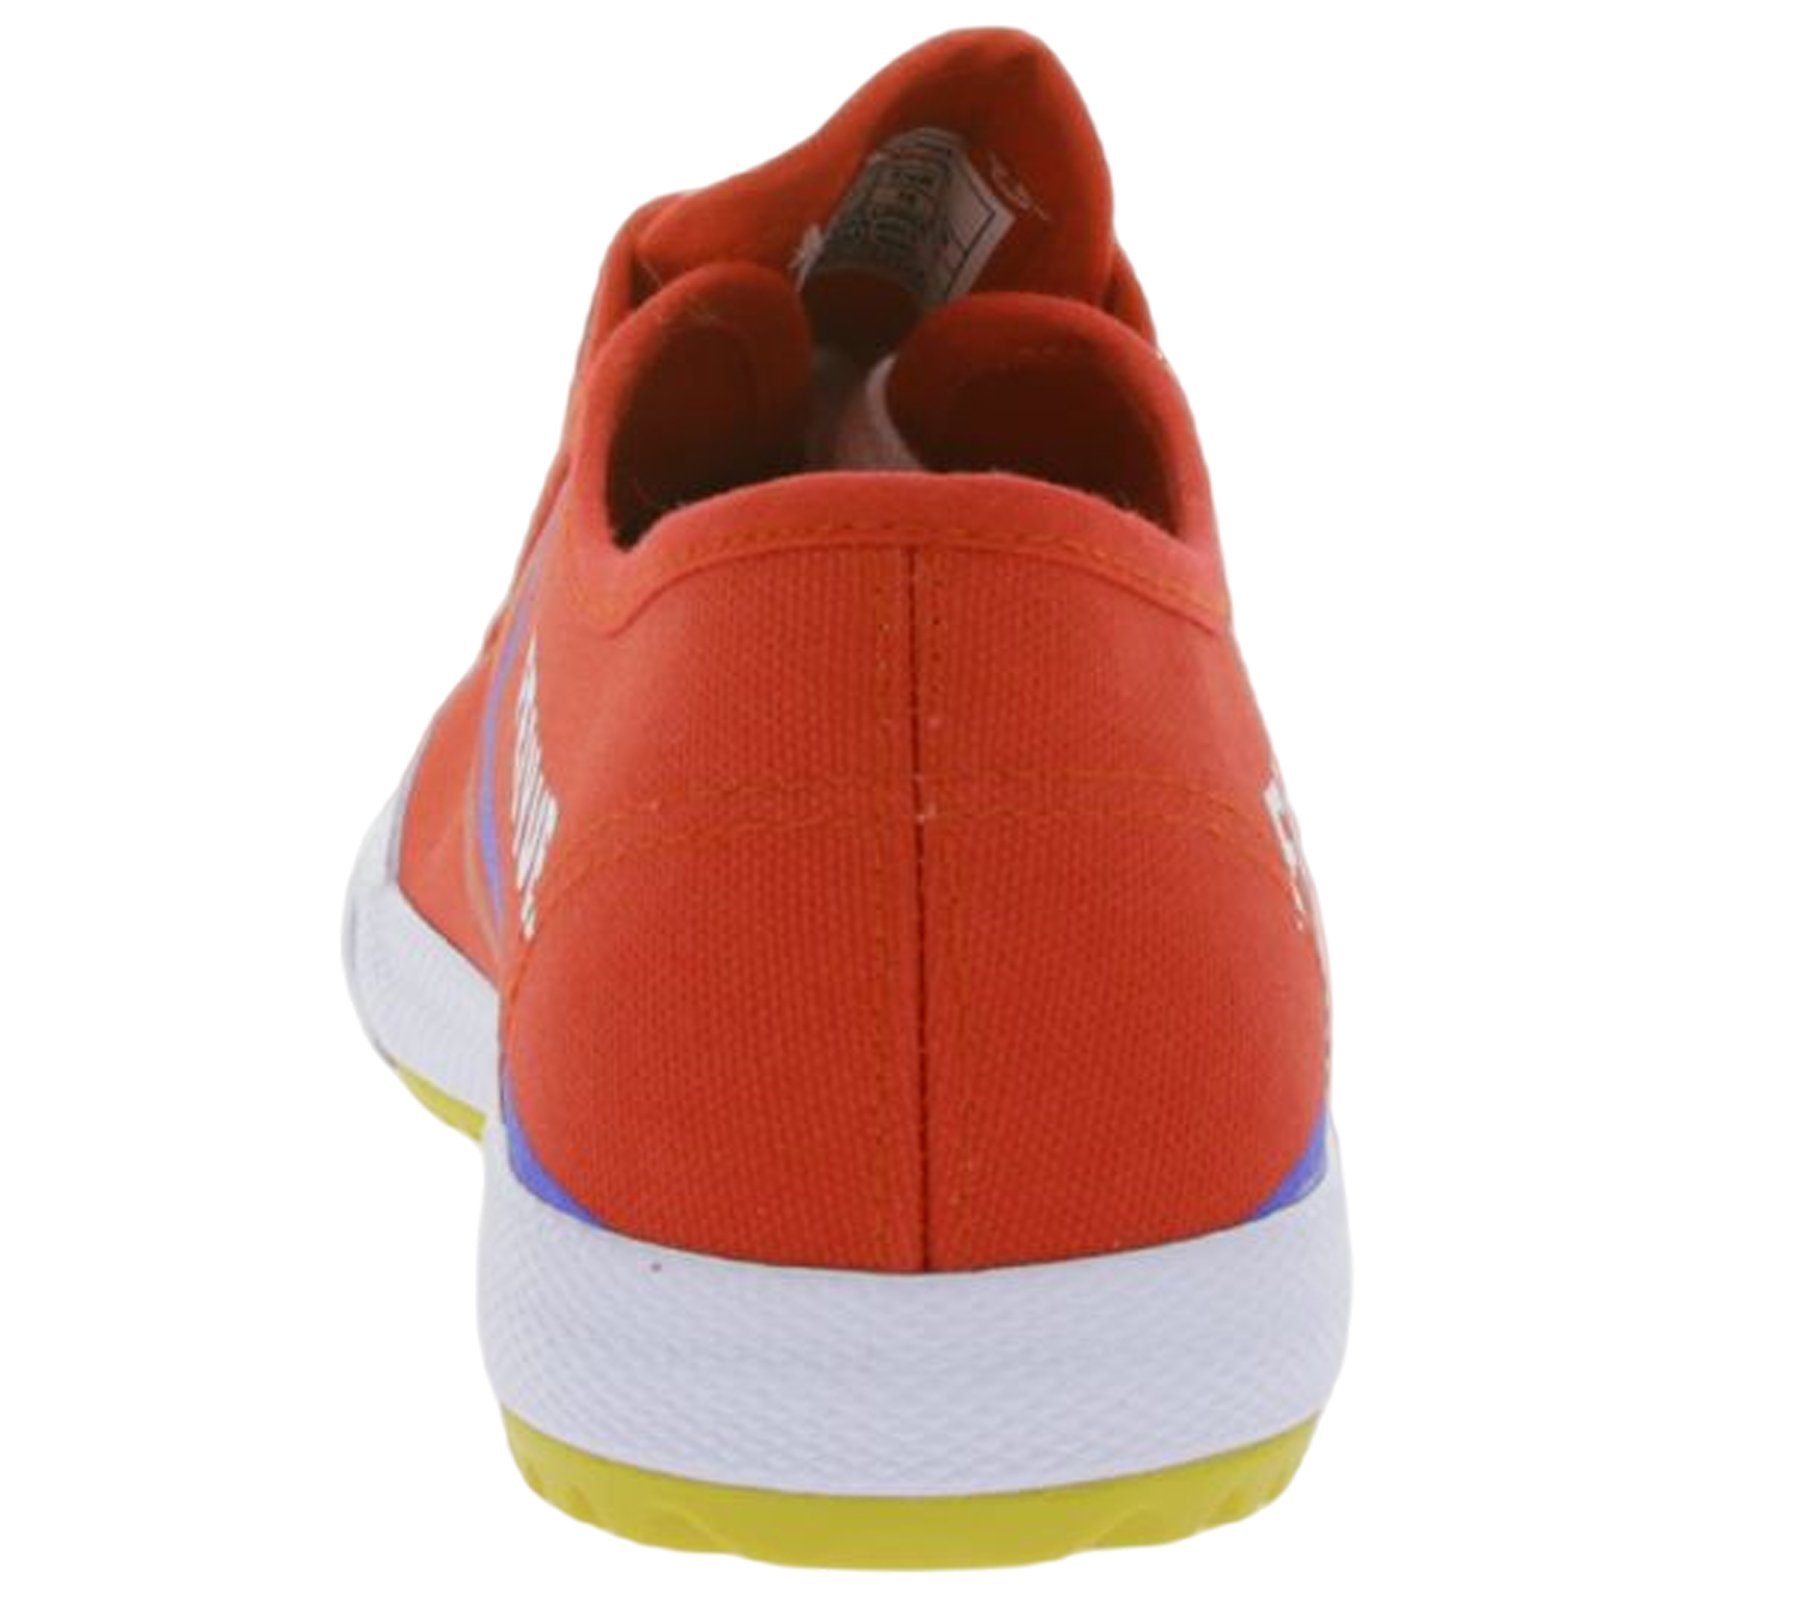 Feiyue Lo Plimsoll-Design Sneaker Feiyue Rot in für Sneaker Fe Trainings-Schuhe 1920 Turnschuhe Canvas Kampfkunst